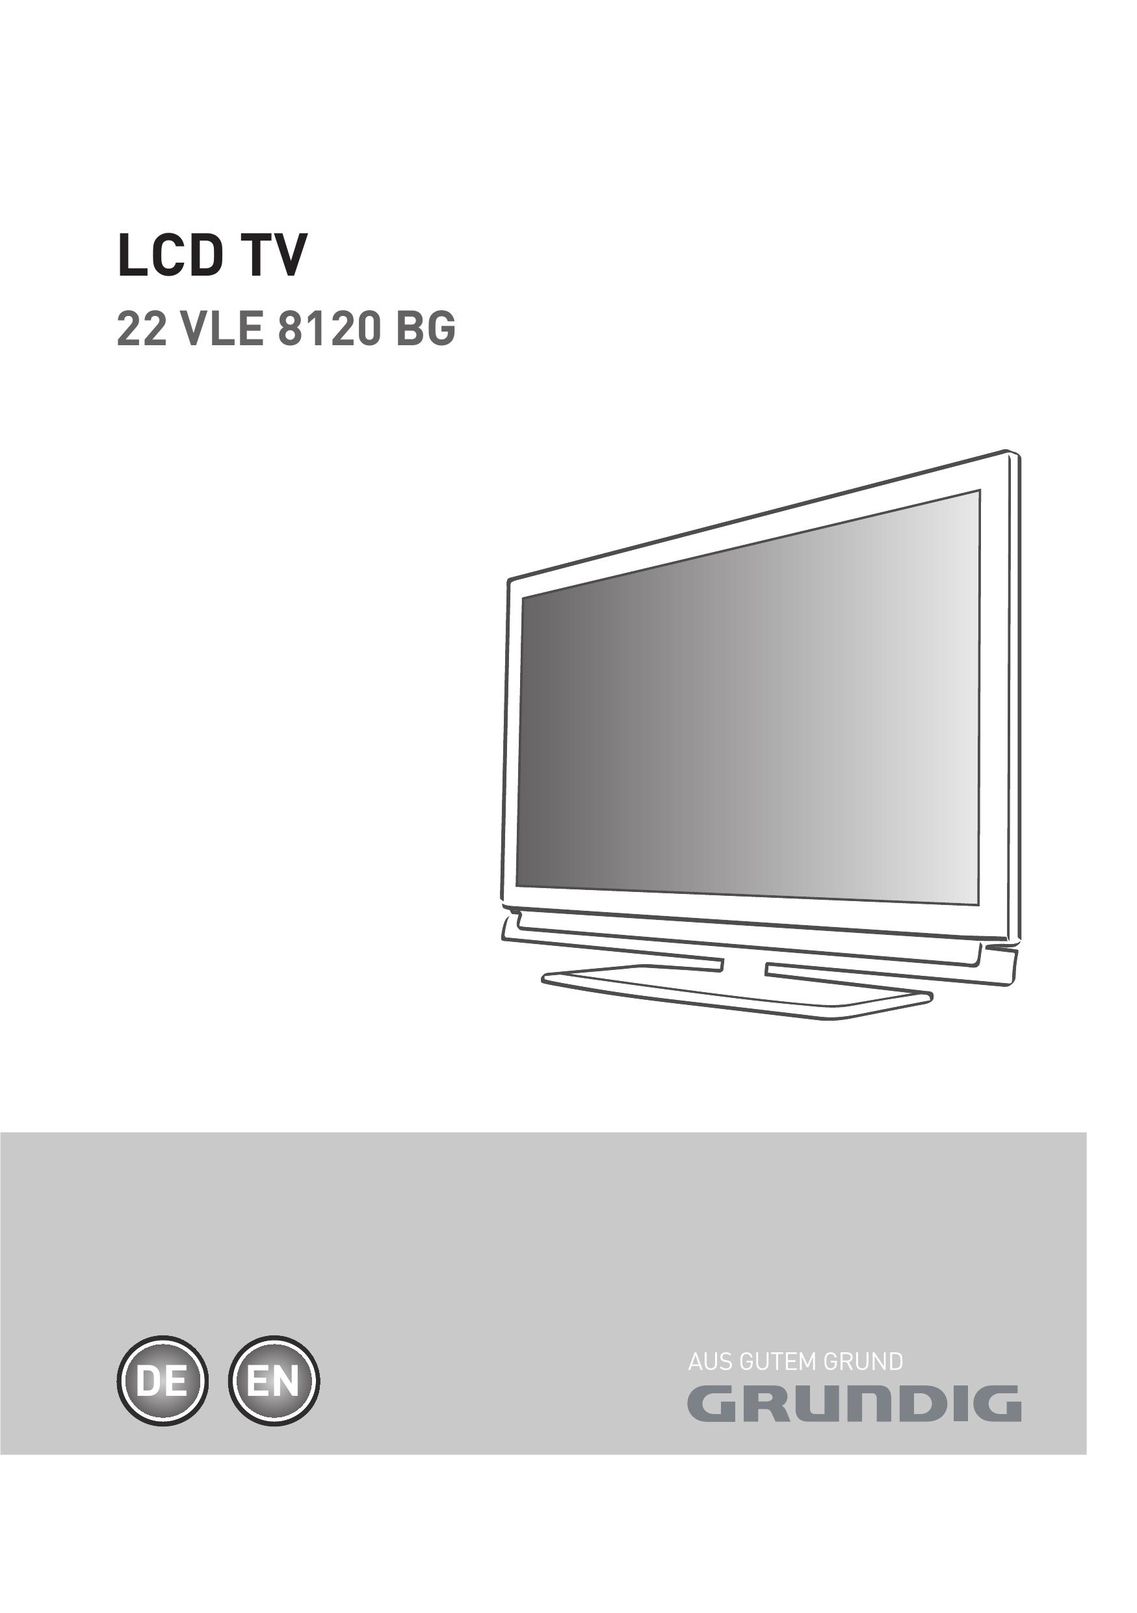 Grundig 22 VLE 8120 BG Flat Panel Television User Manual